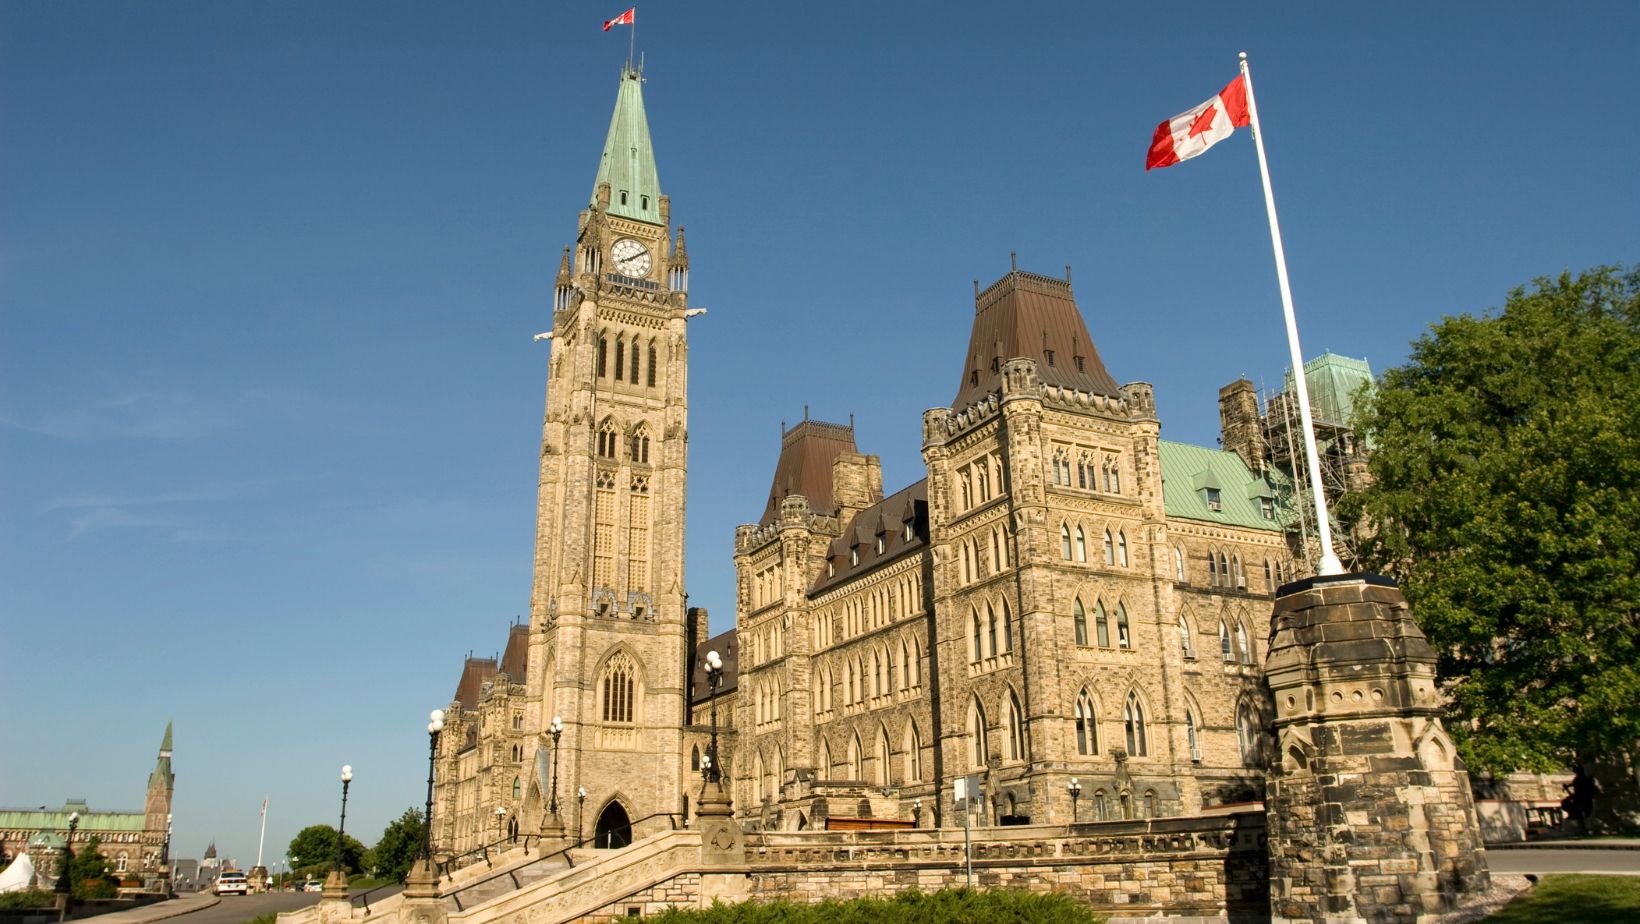 Canada's Parliament building.